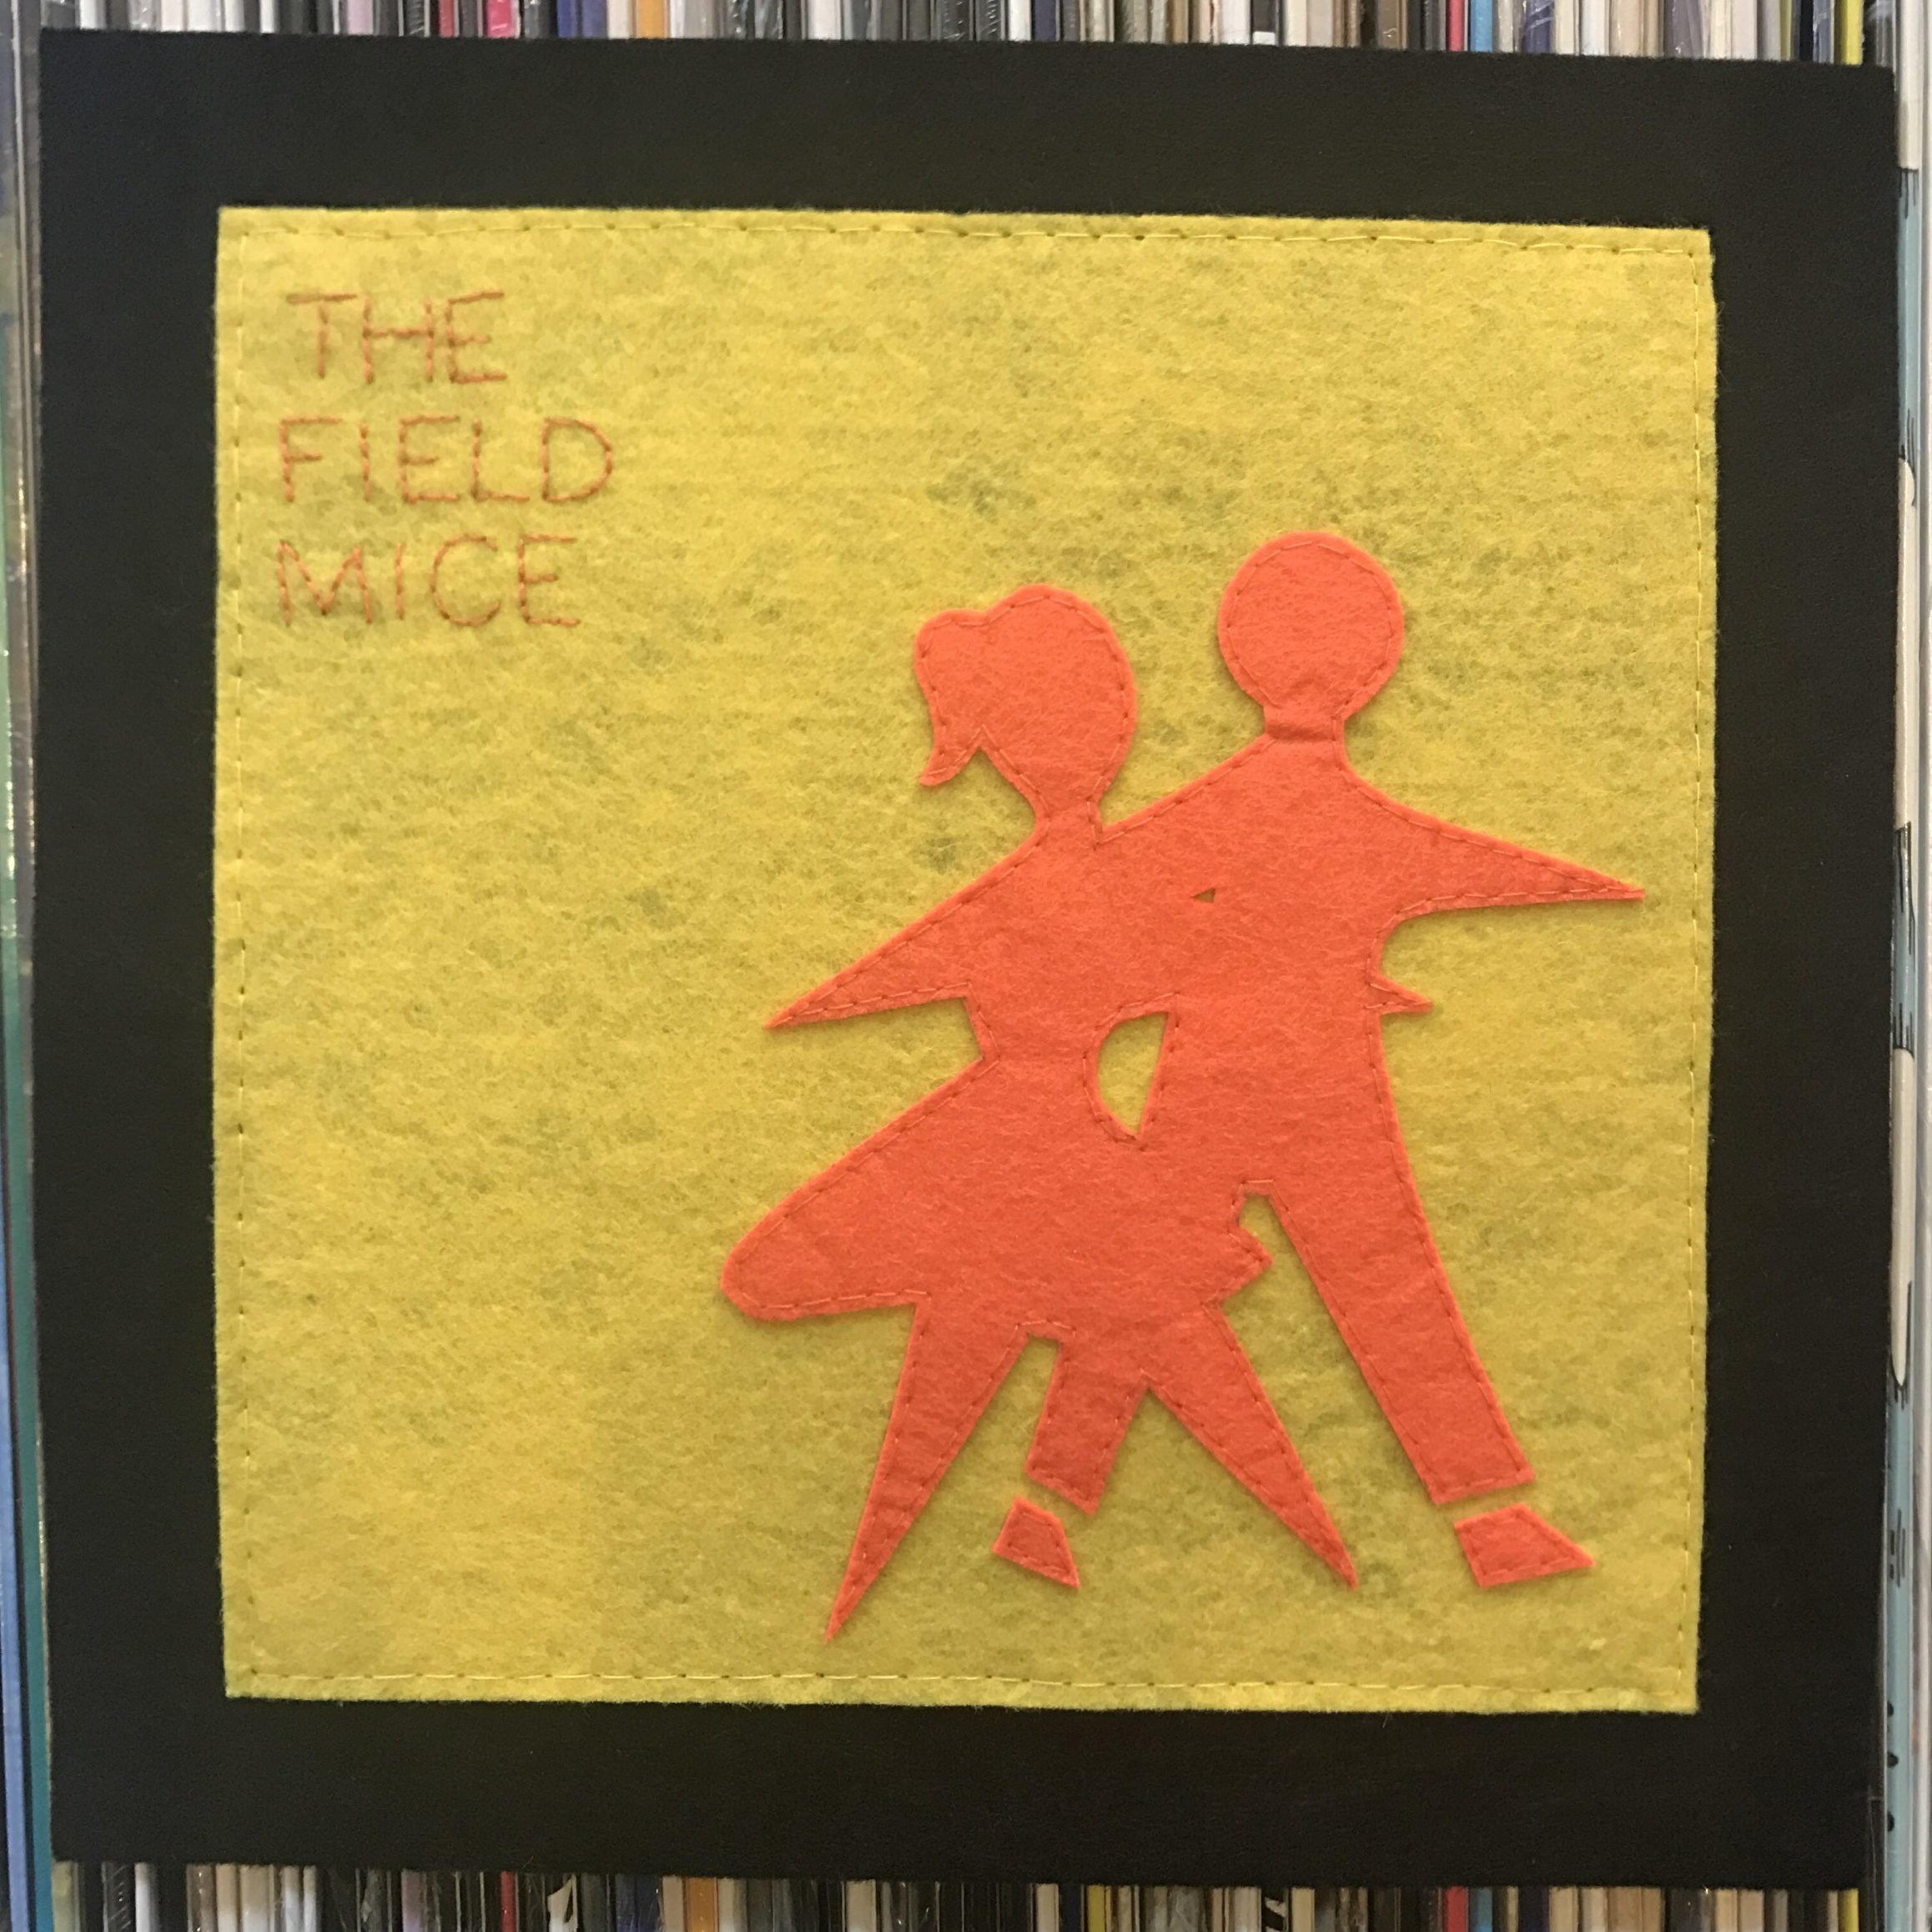 The Field Mice – Emma’s House (1988)